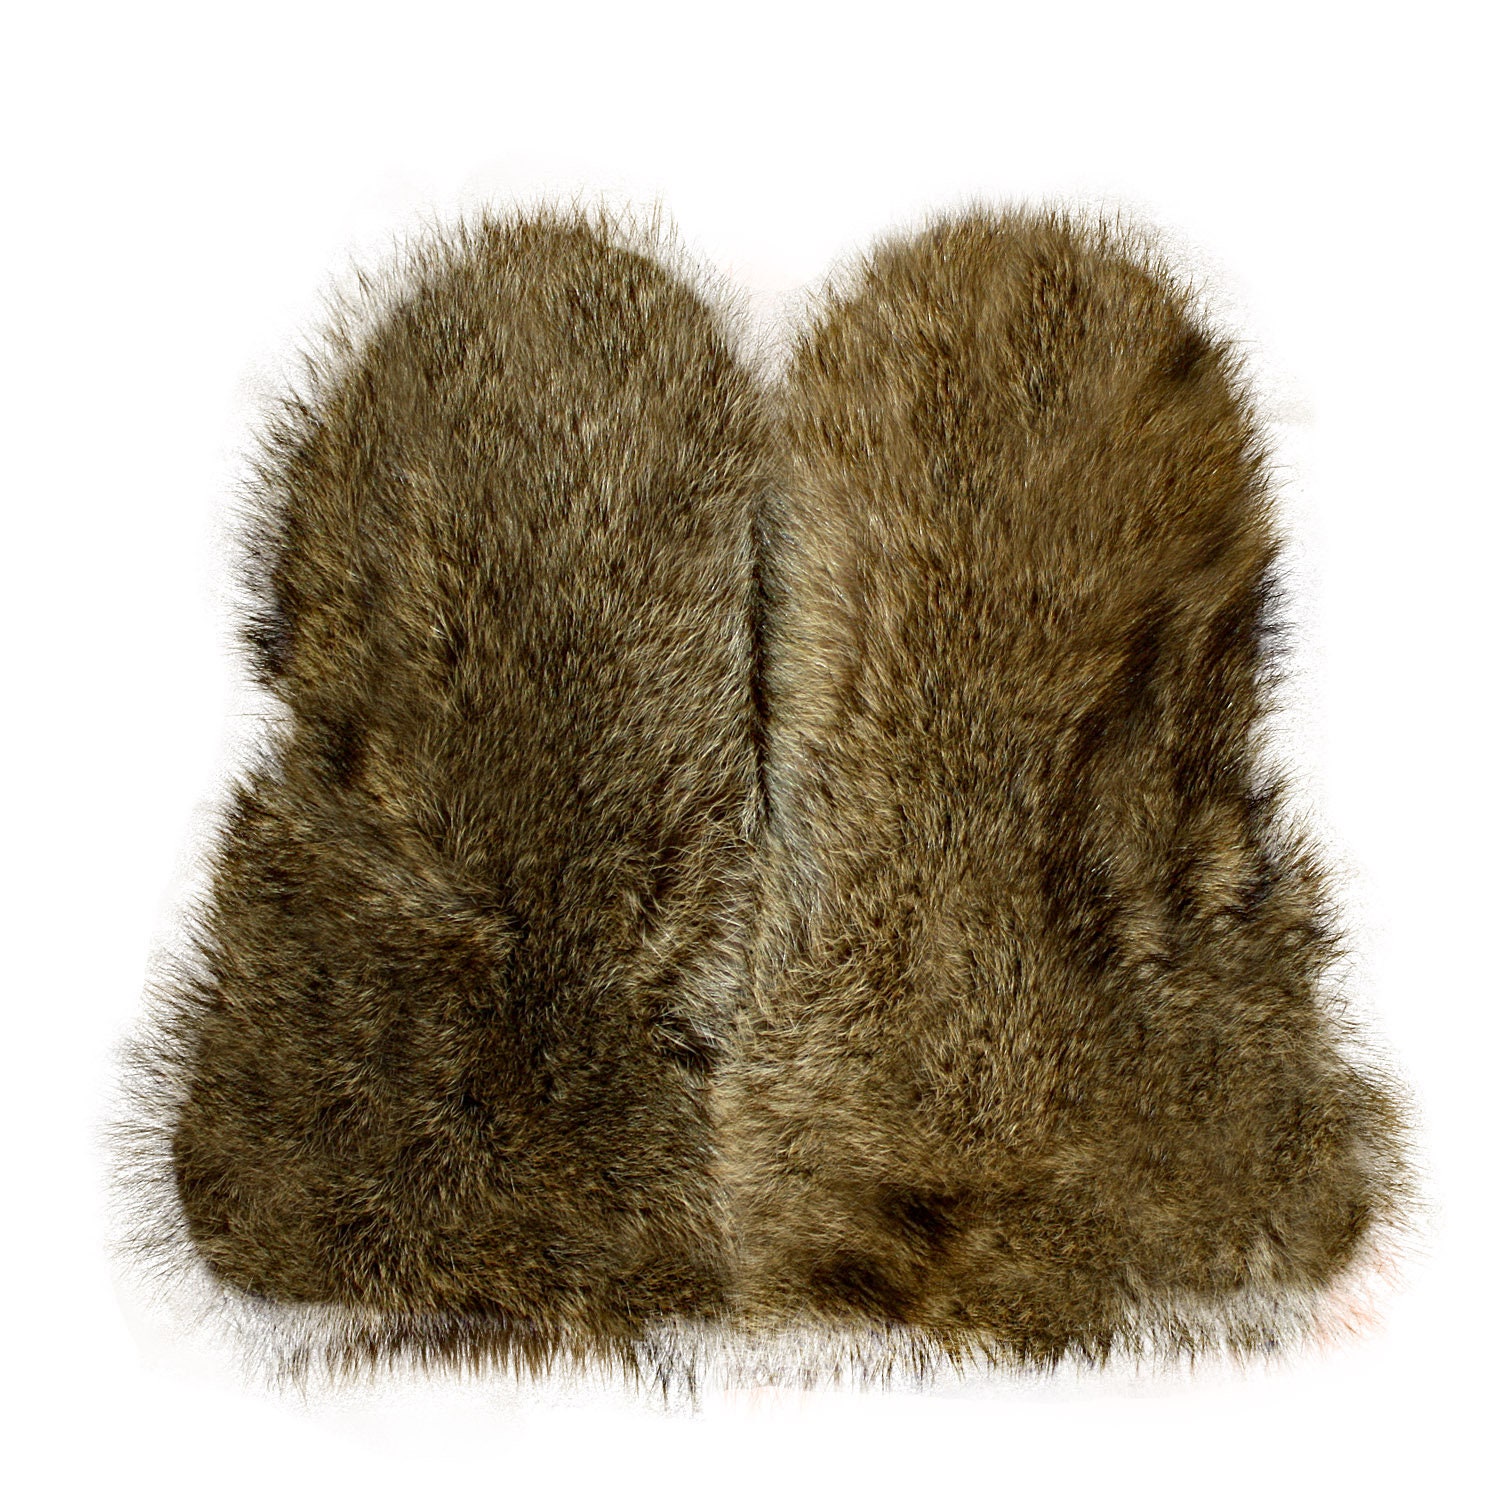 Glacier Wear Raccoon Fur Gauntlet Mittens mts1010 | Etsy